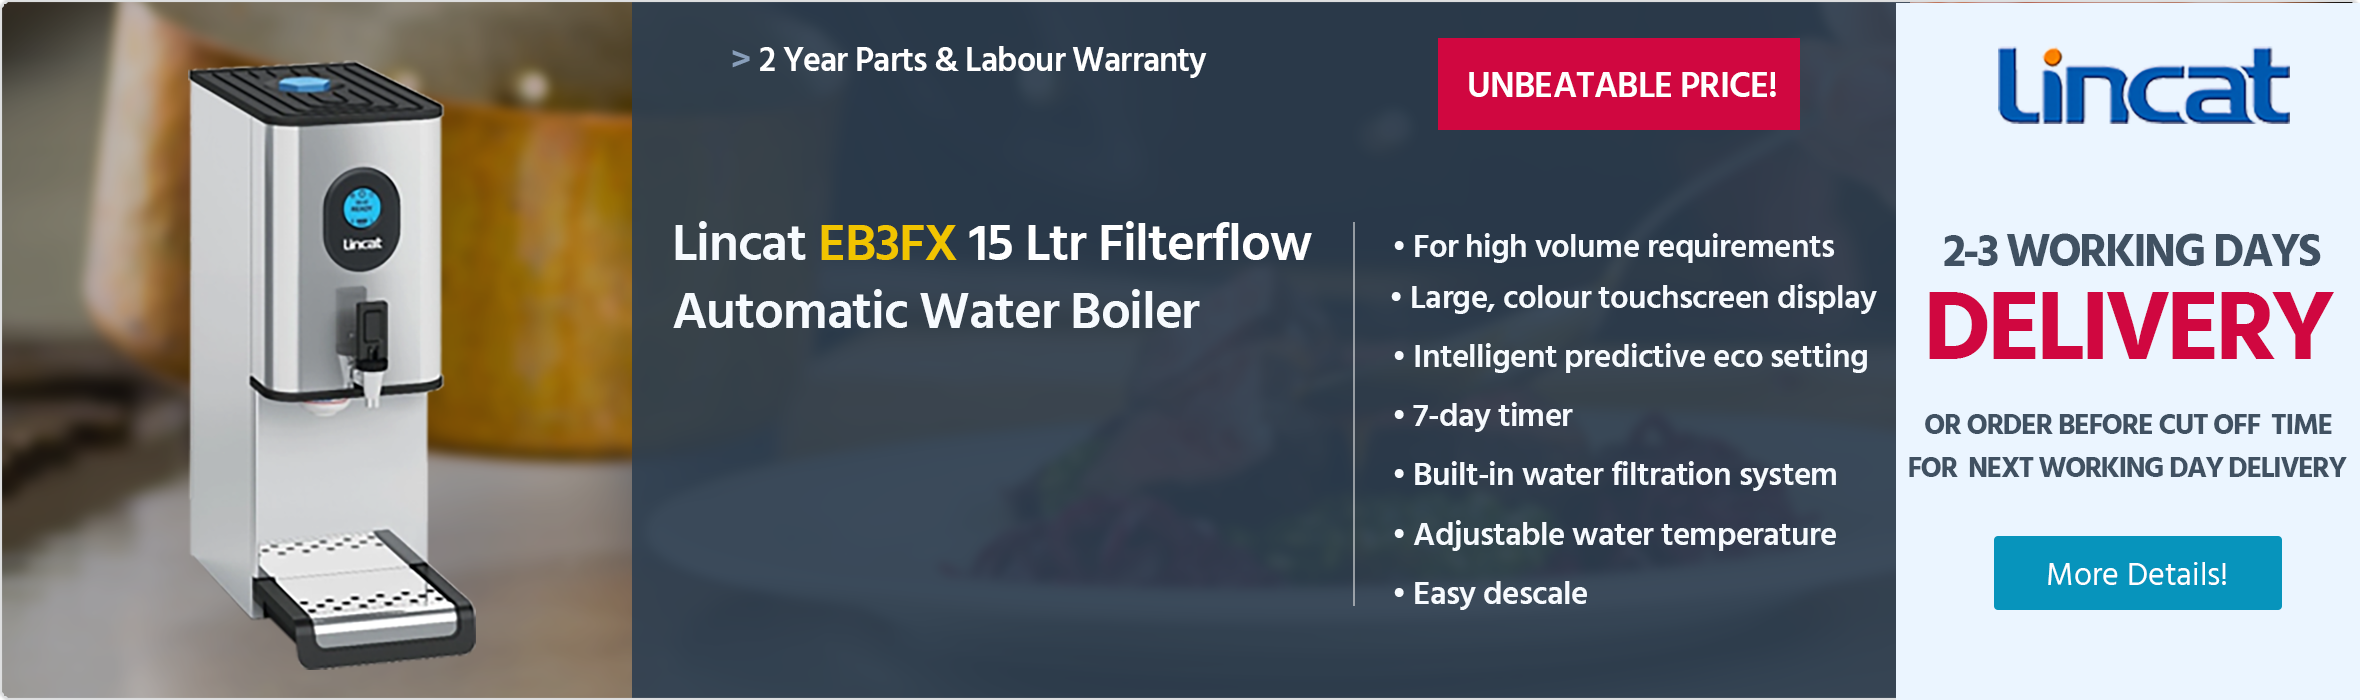 Lincat EB3FX 11 Ltr Filterflow Automatic Water Boiler